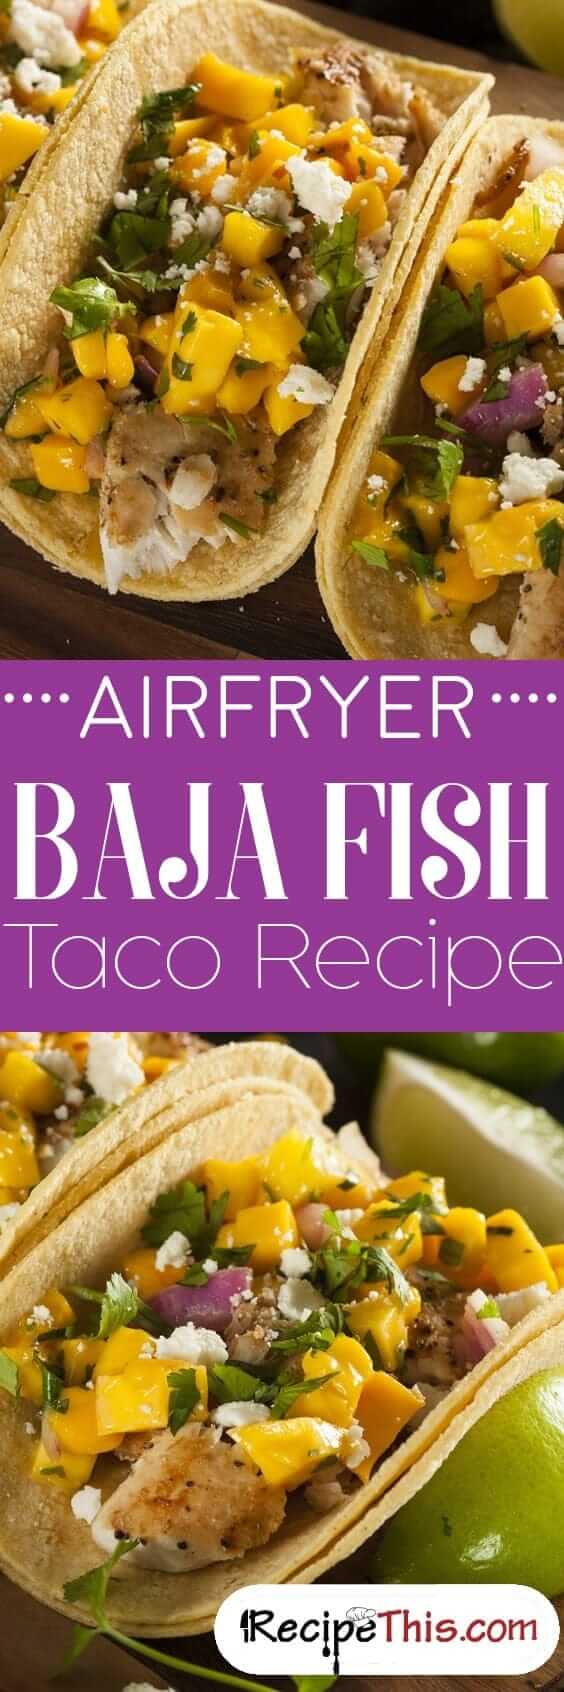 Baja Fish Taco Recipe